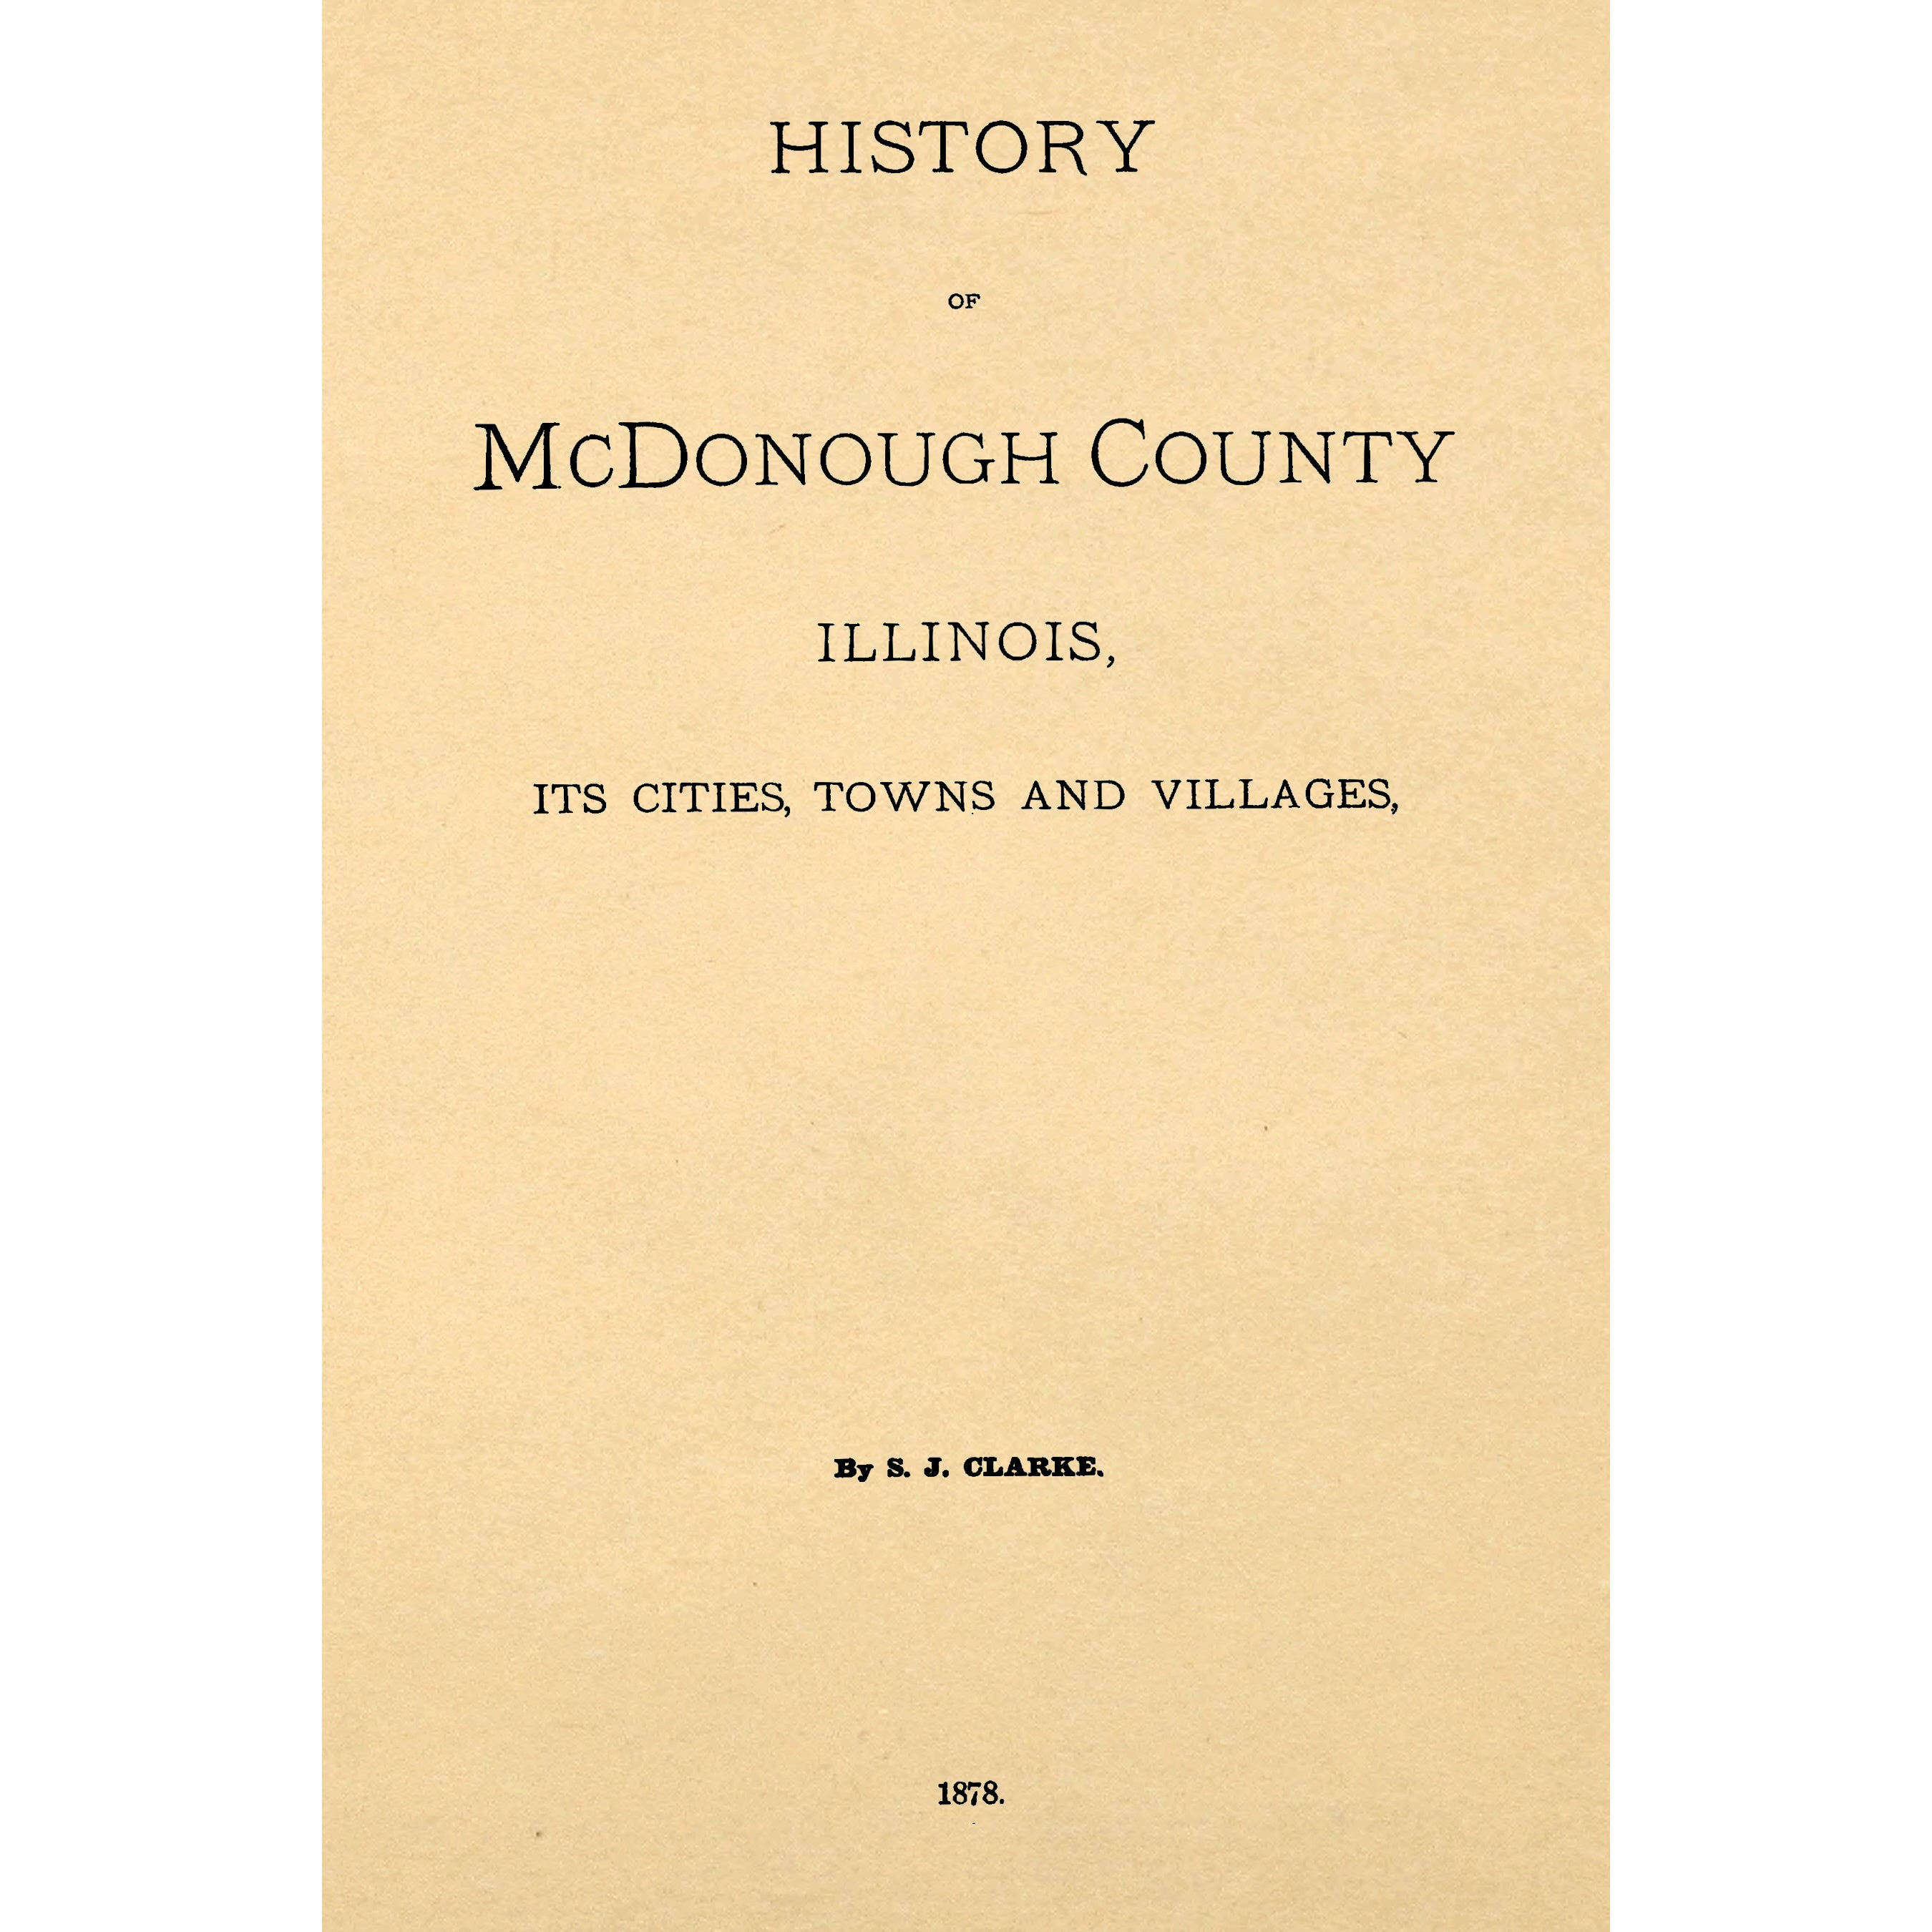 History of McDonough county, Illinois